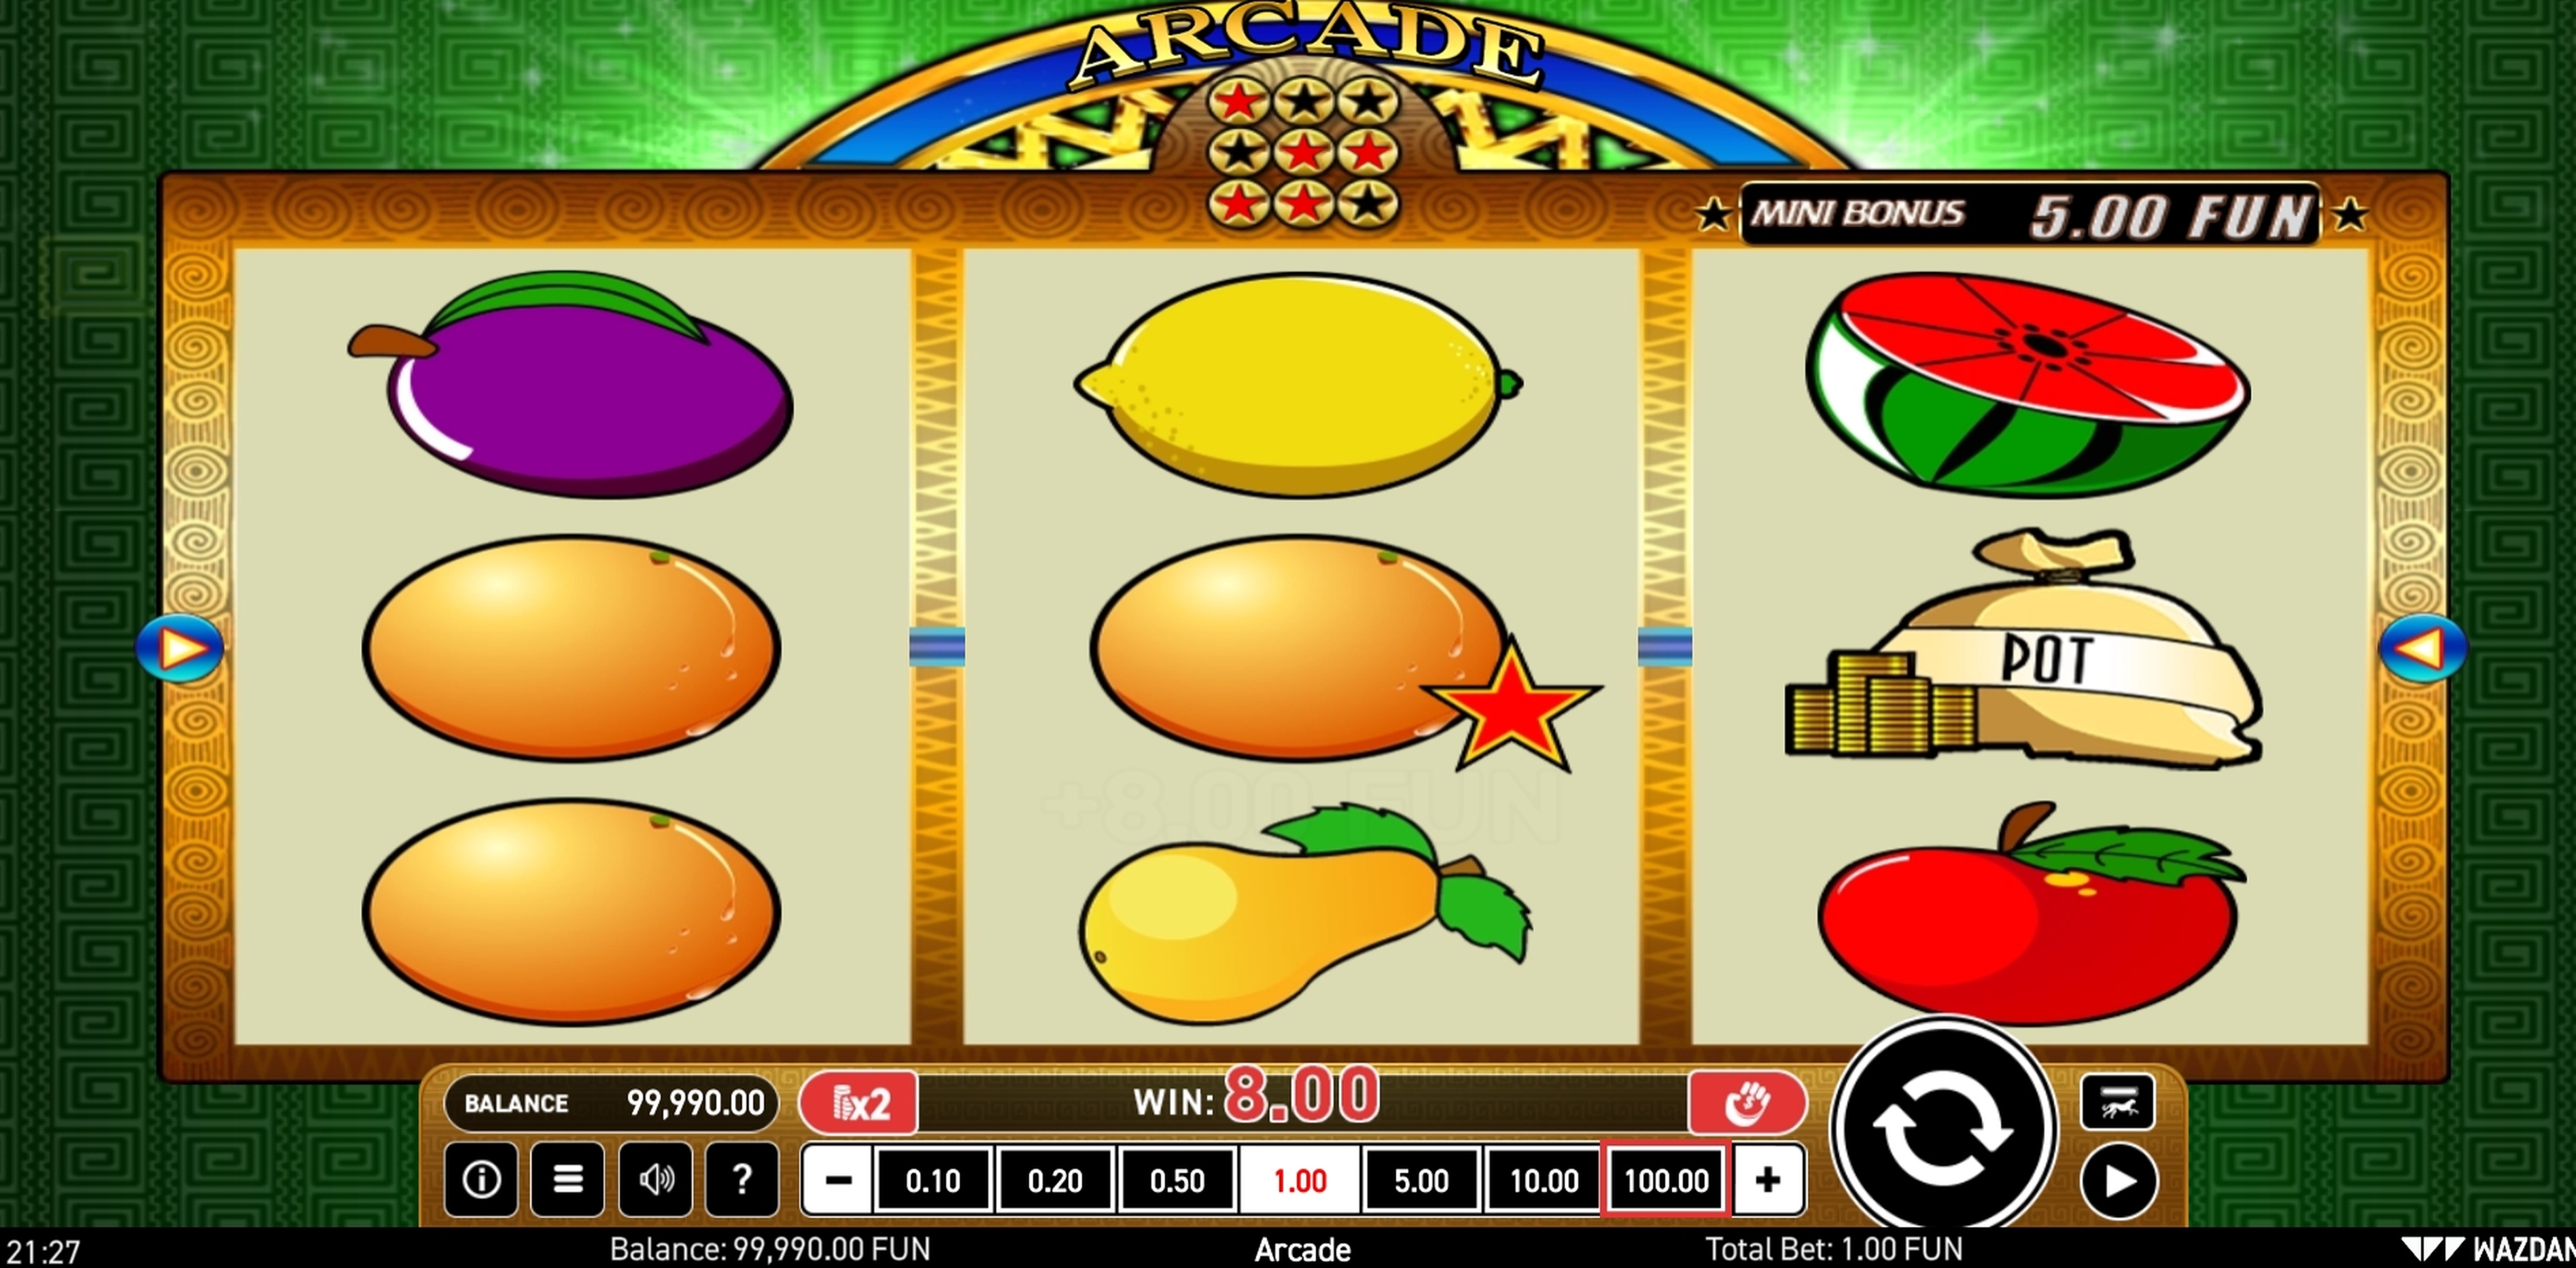 Win Money in Arcade Free Slot Game by Wazdan